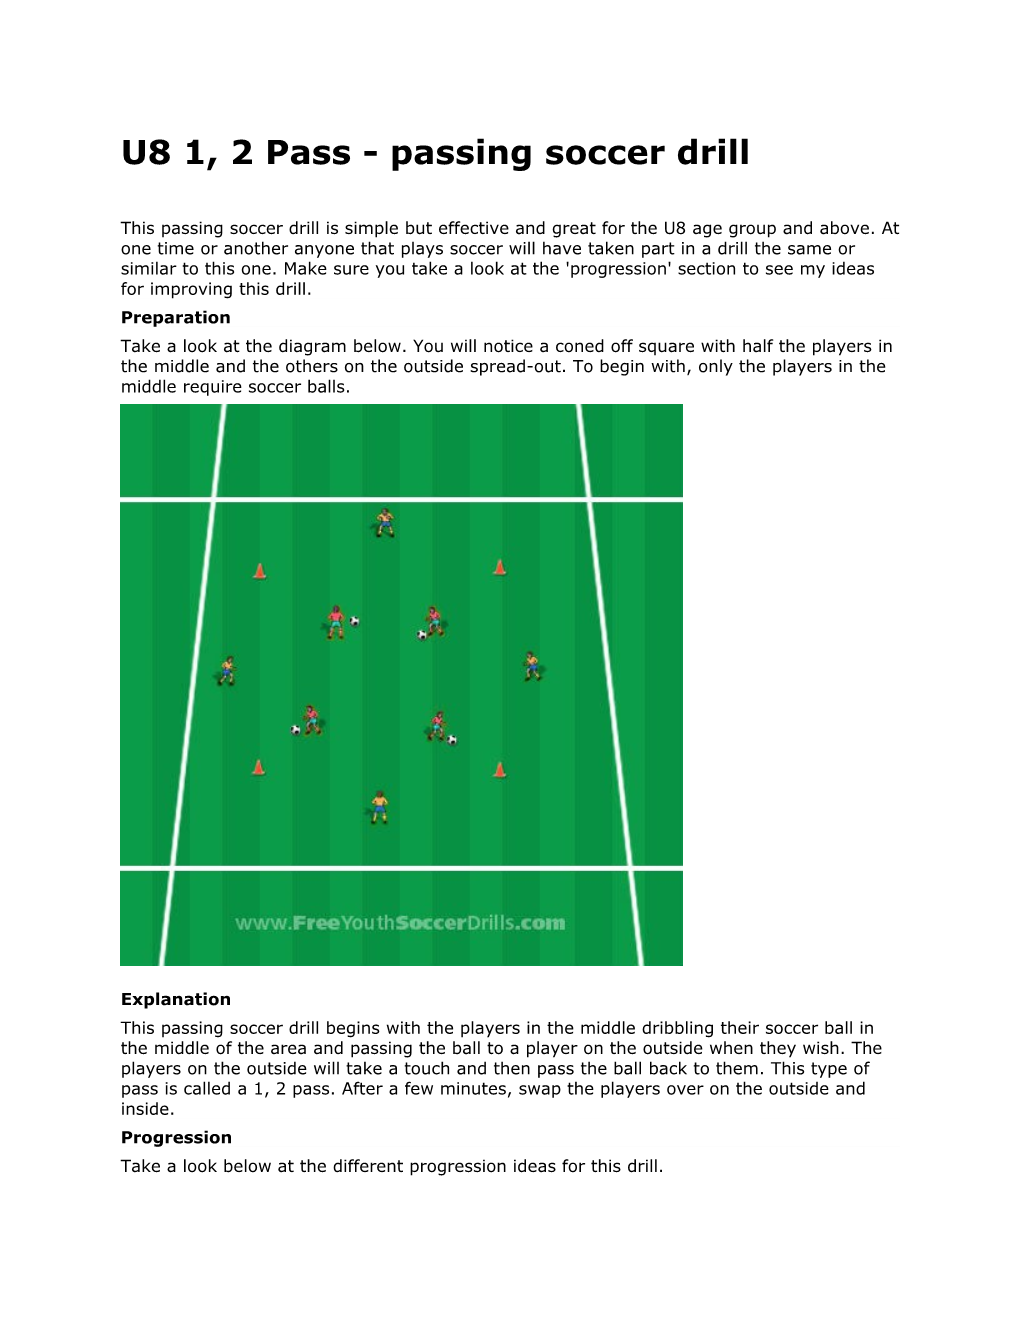 U8 1, 2 Pass - Passing Soccer Drill